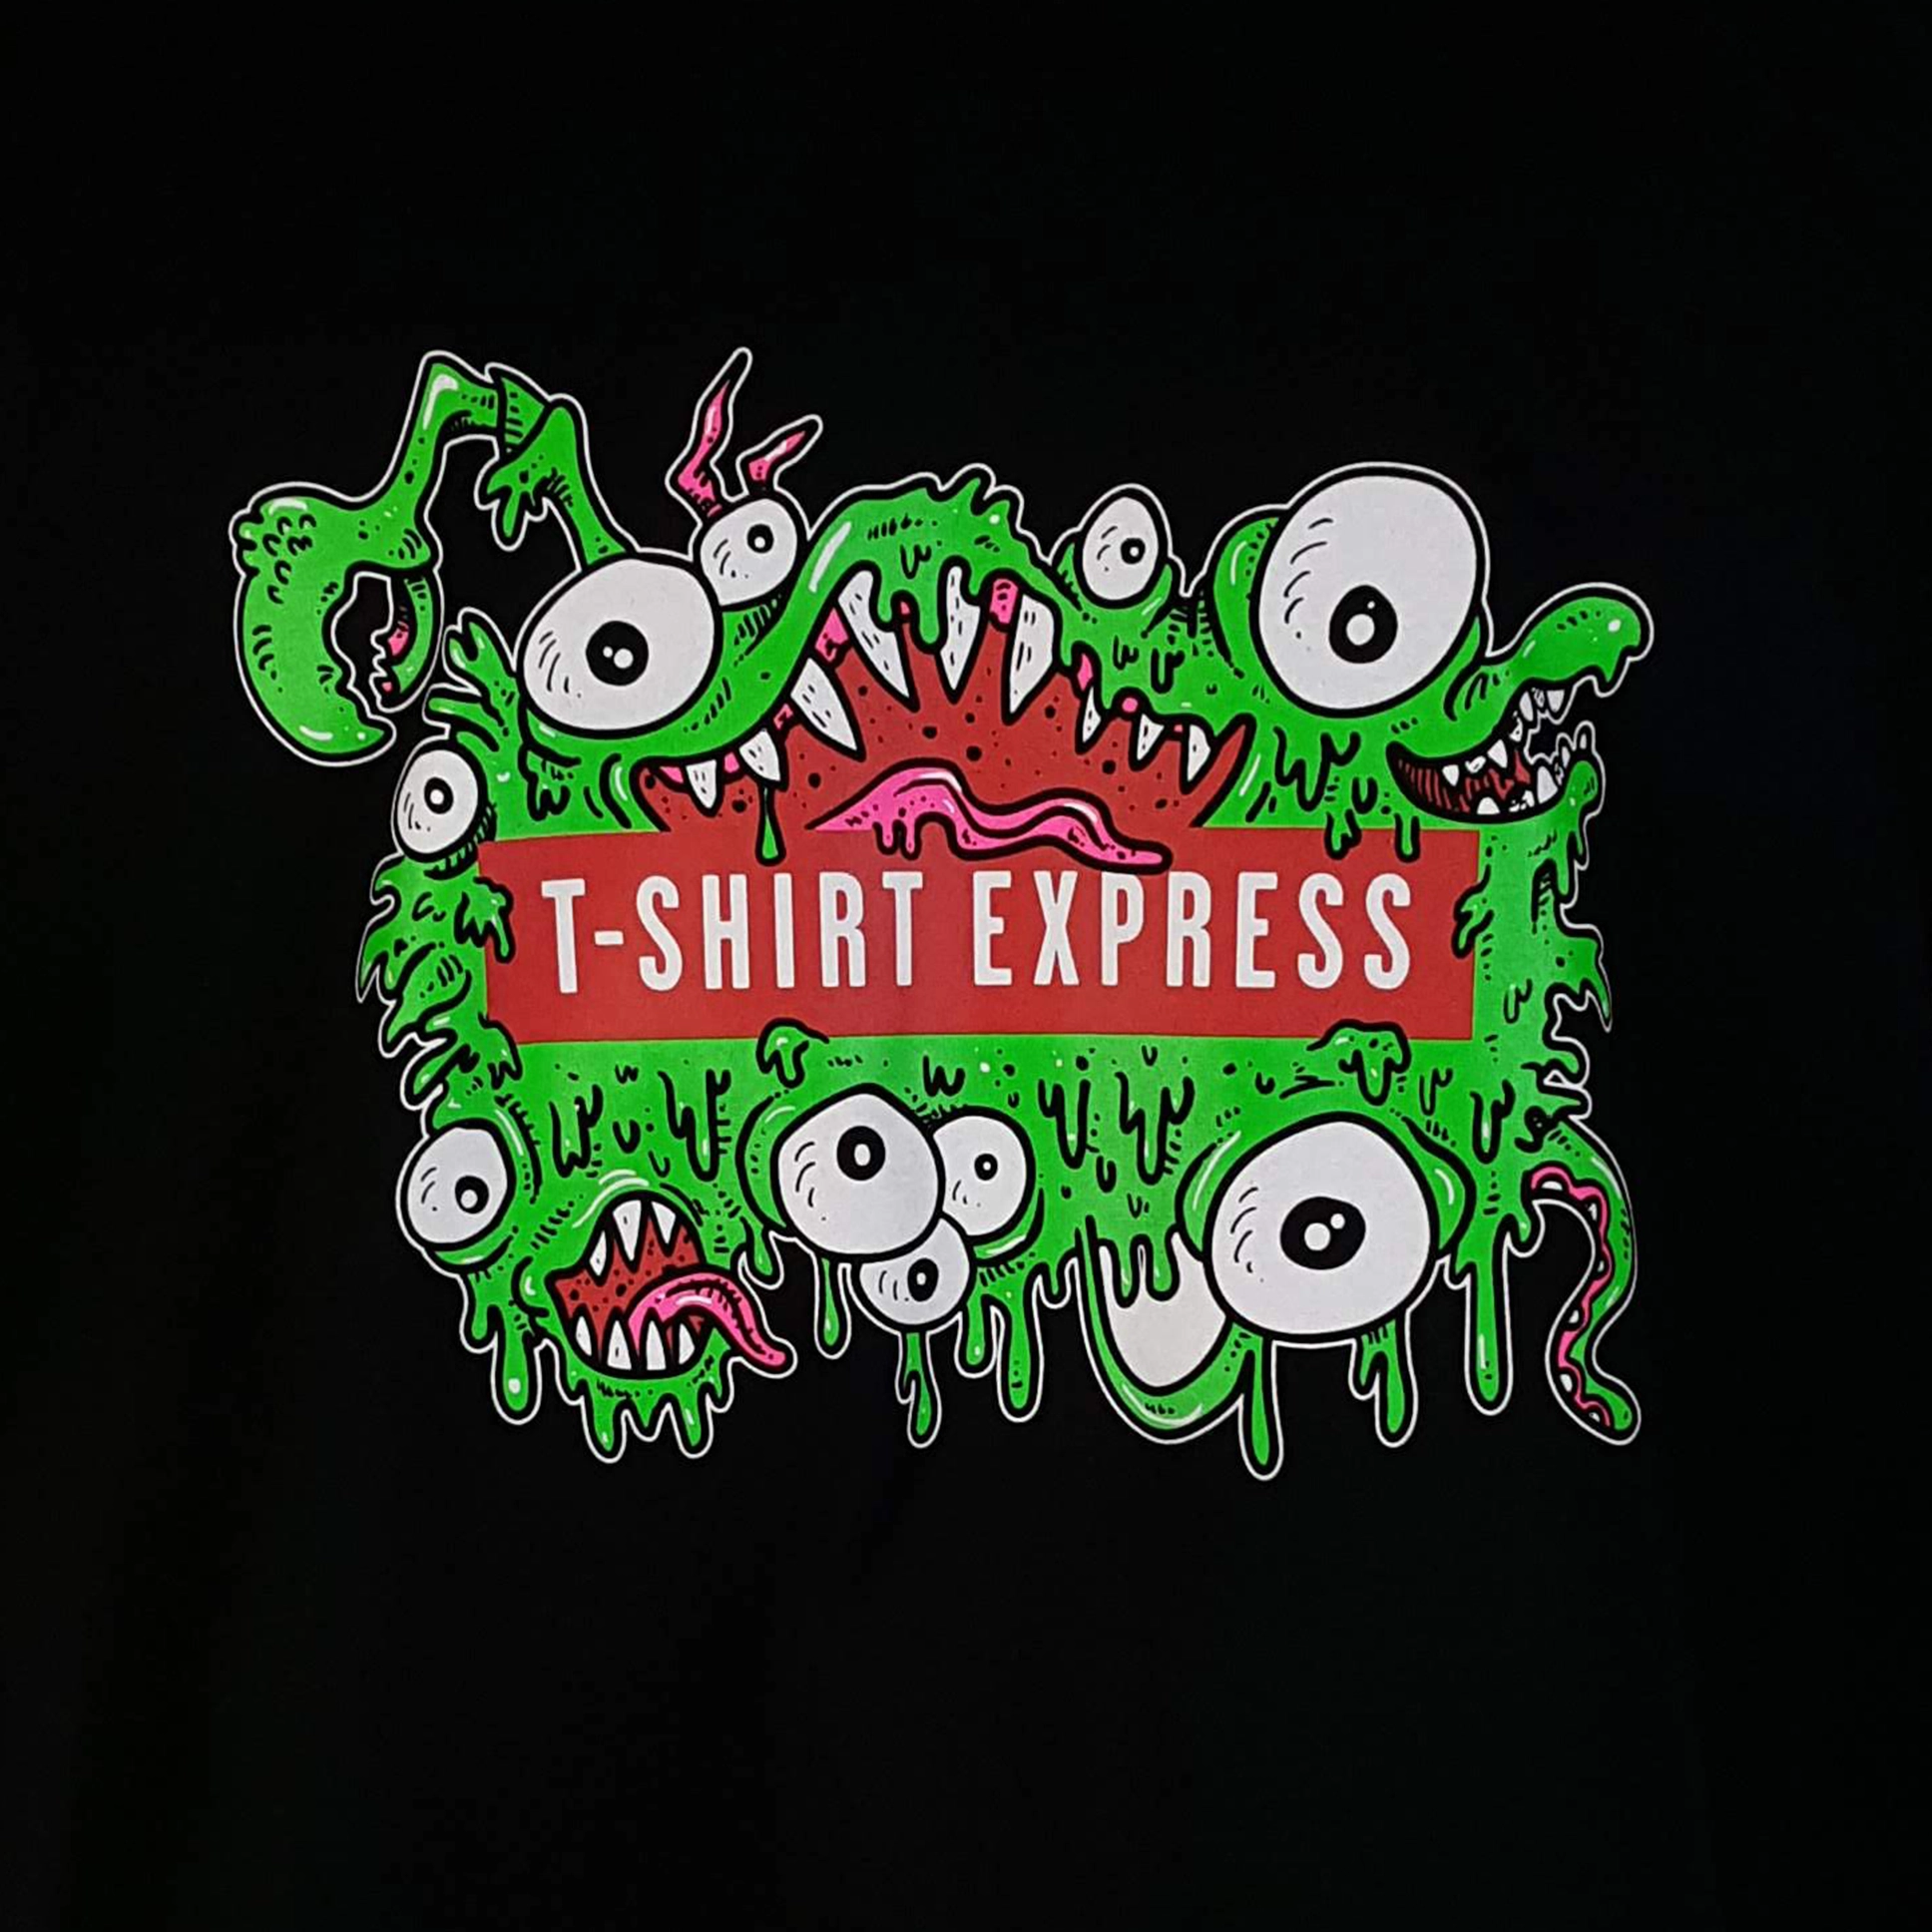 t-shirt express in Stratford ohio